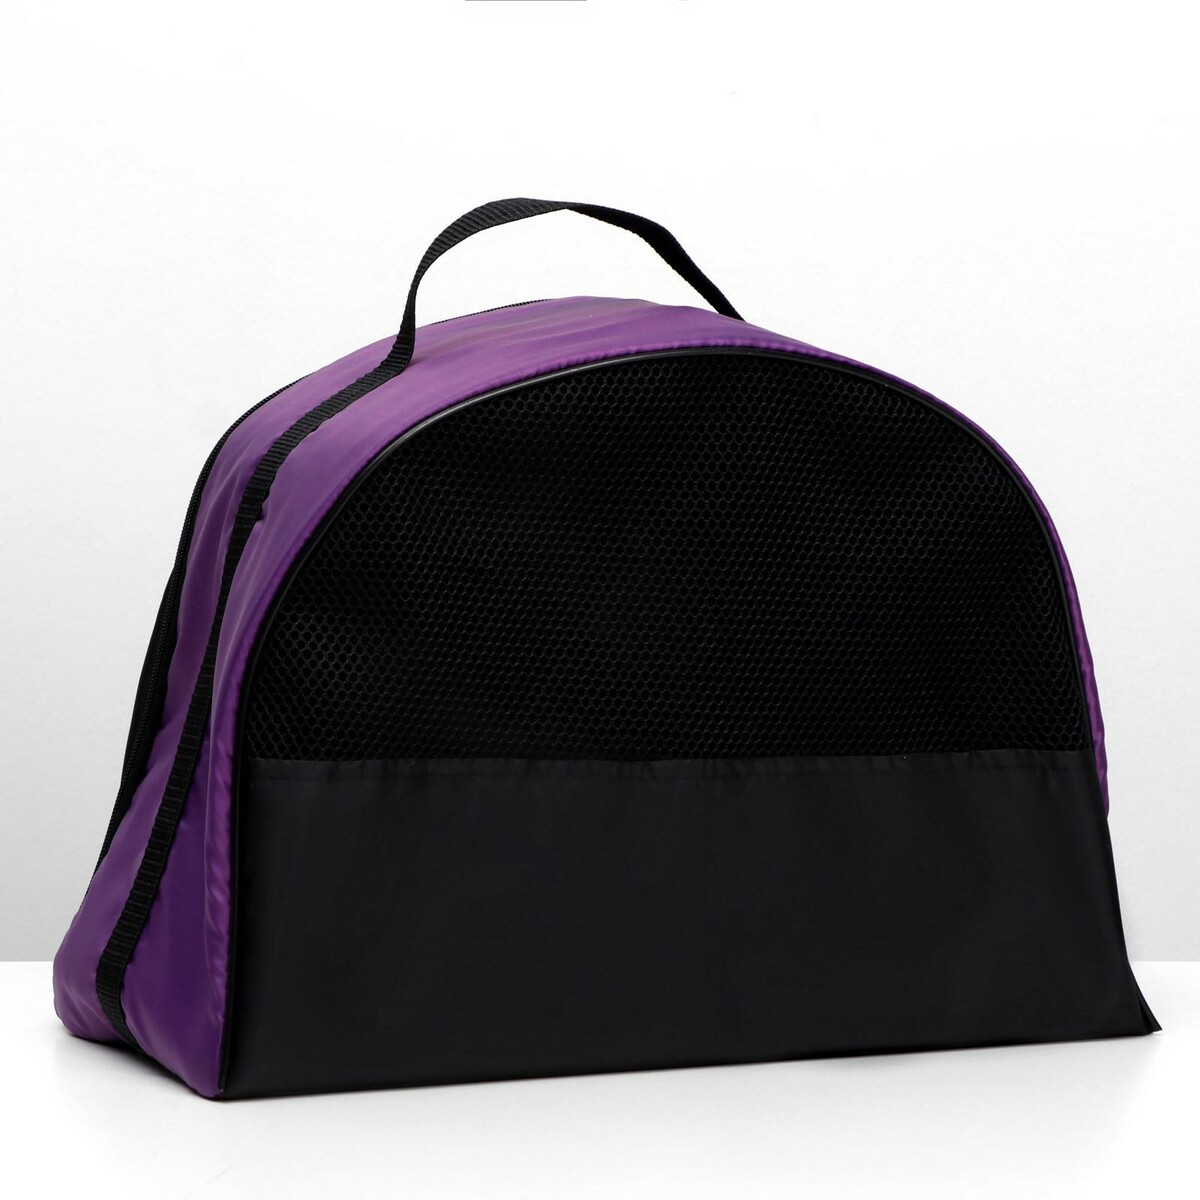 Сумка - переноска для животных, оксфорд, 42 х 22 х 29 см, фиолетовая сумка переноска для животных полукруглая нейлон 42 х 22 х 29 см василек